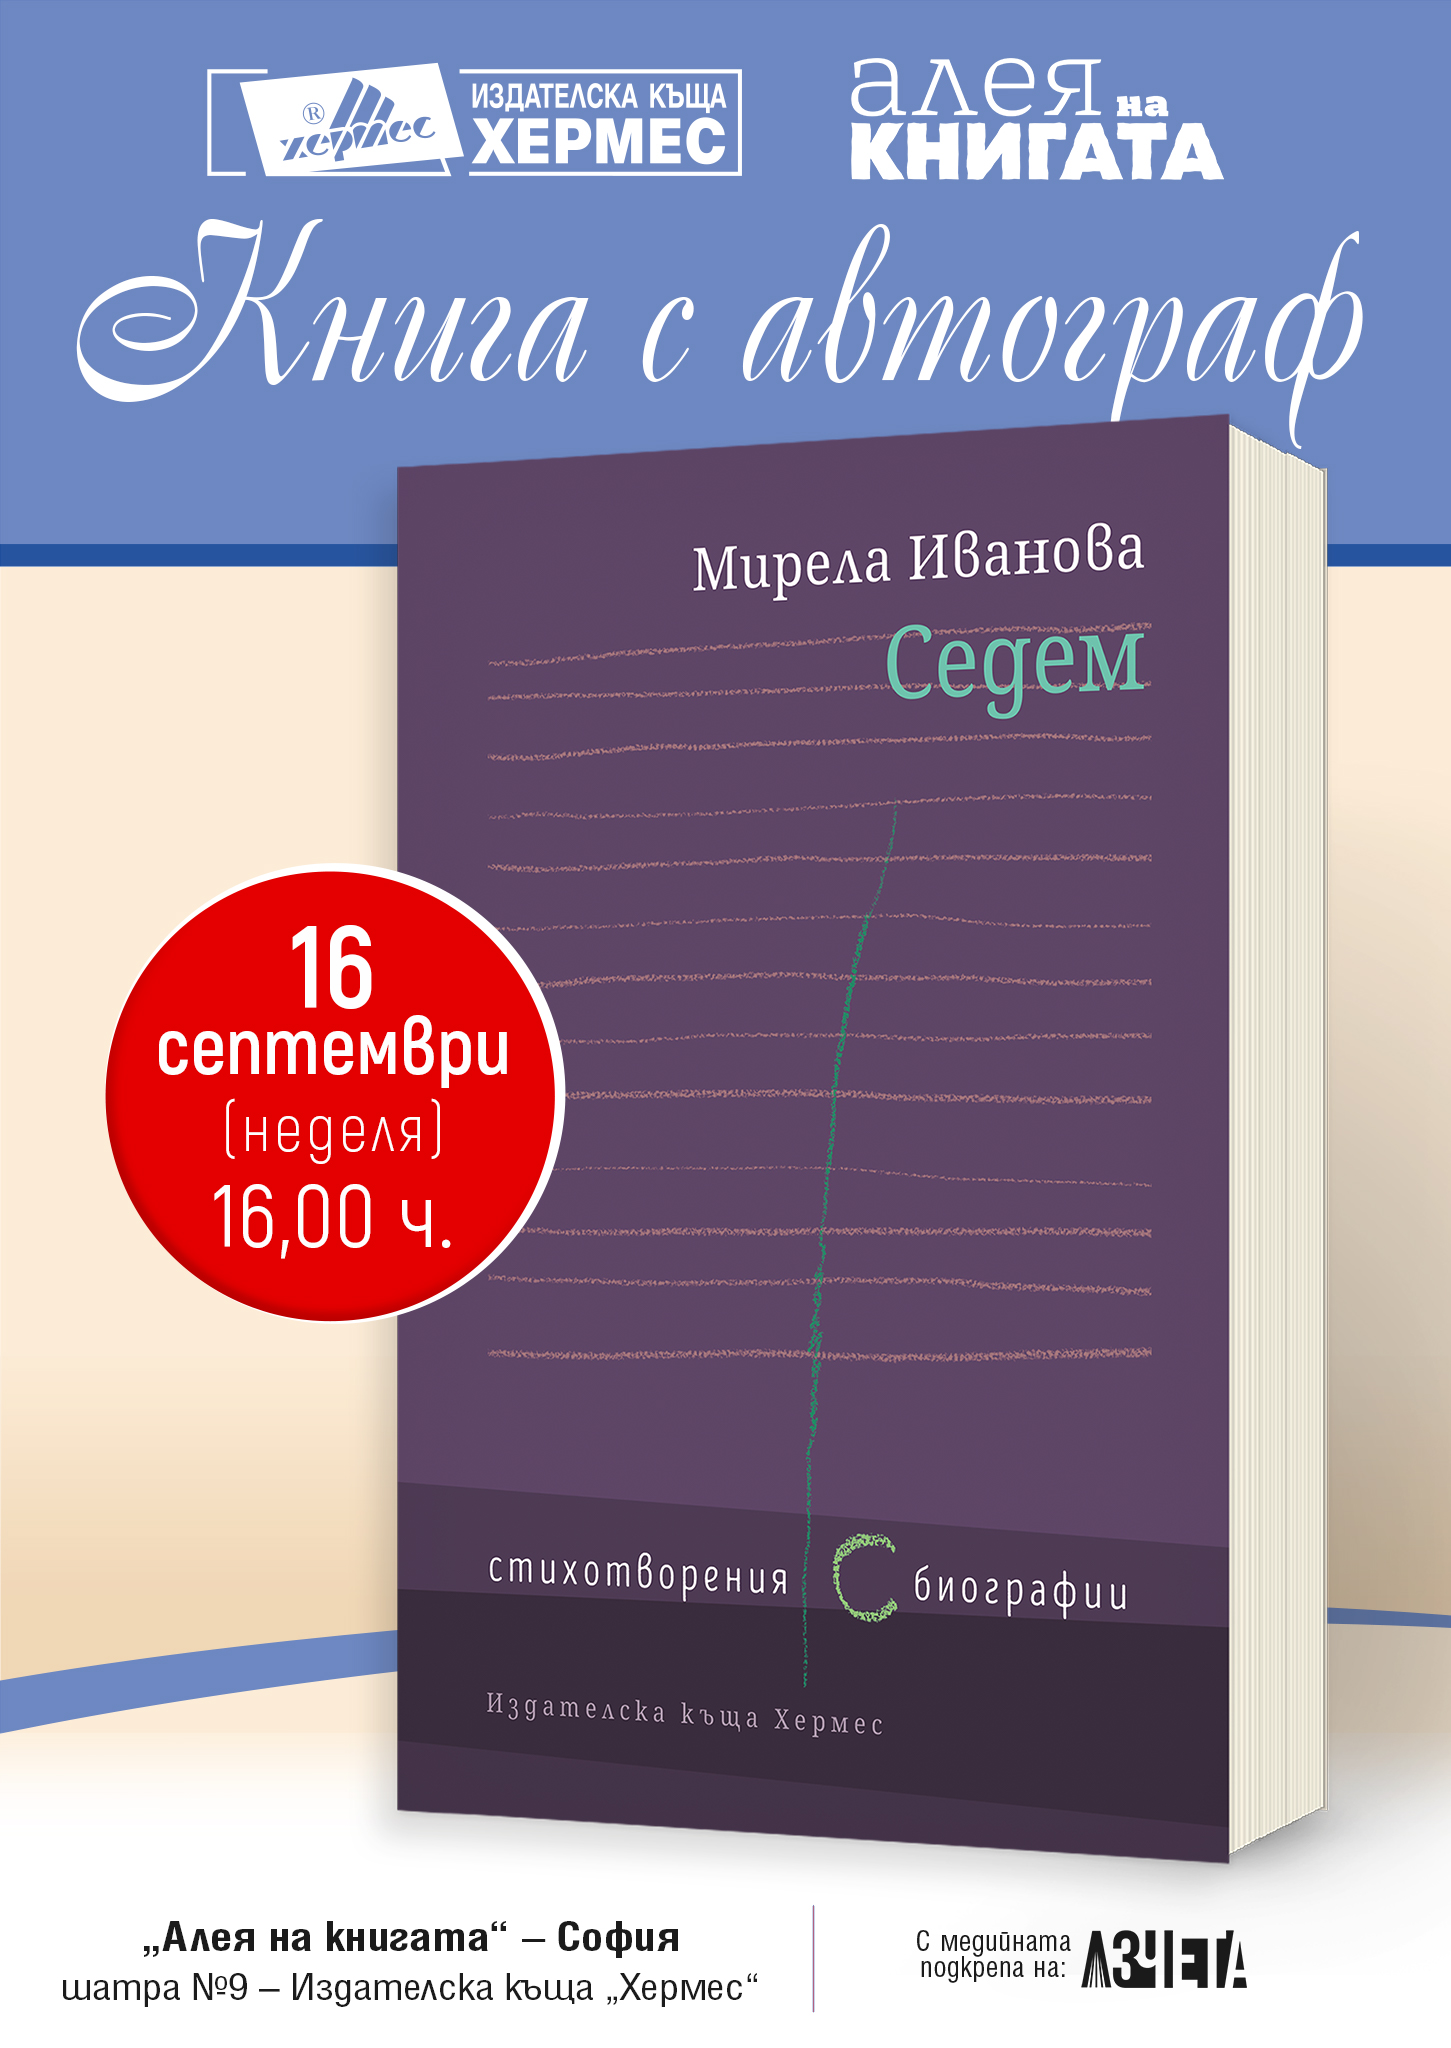 Алея на книгата София 2018: Среща с автограф с Мирела Иванова